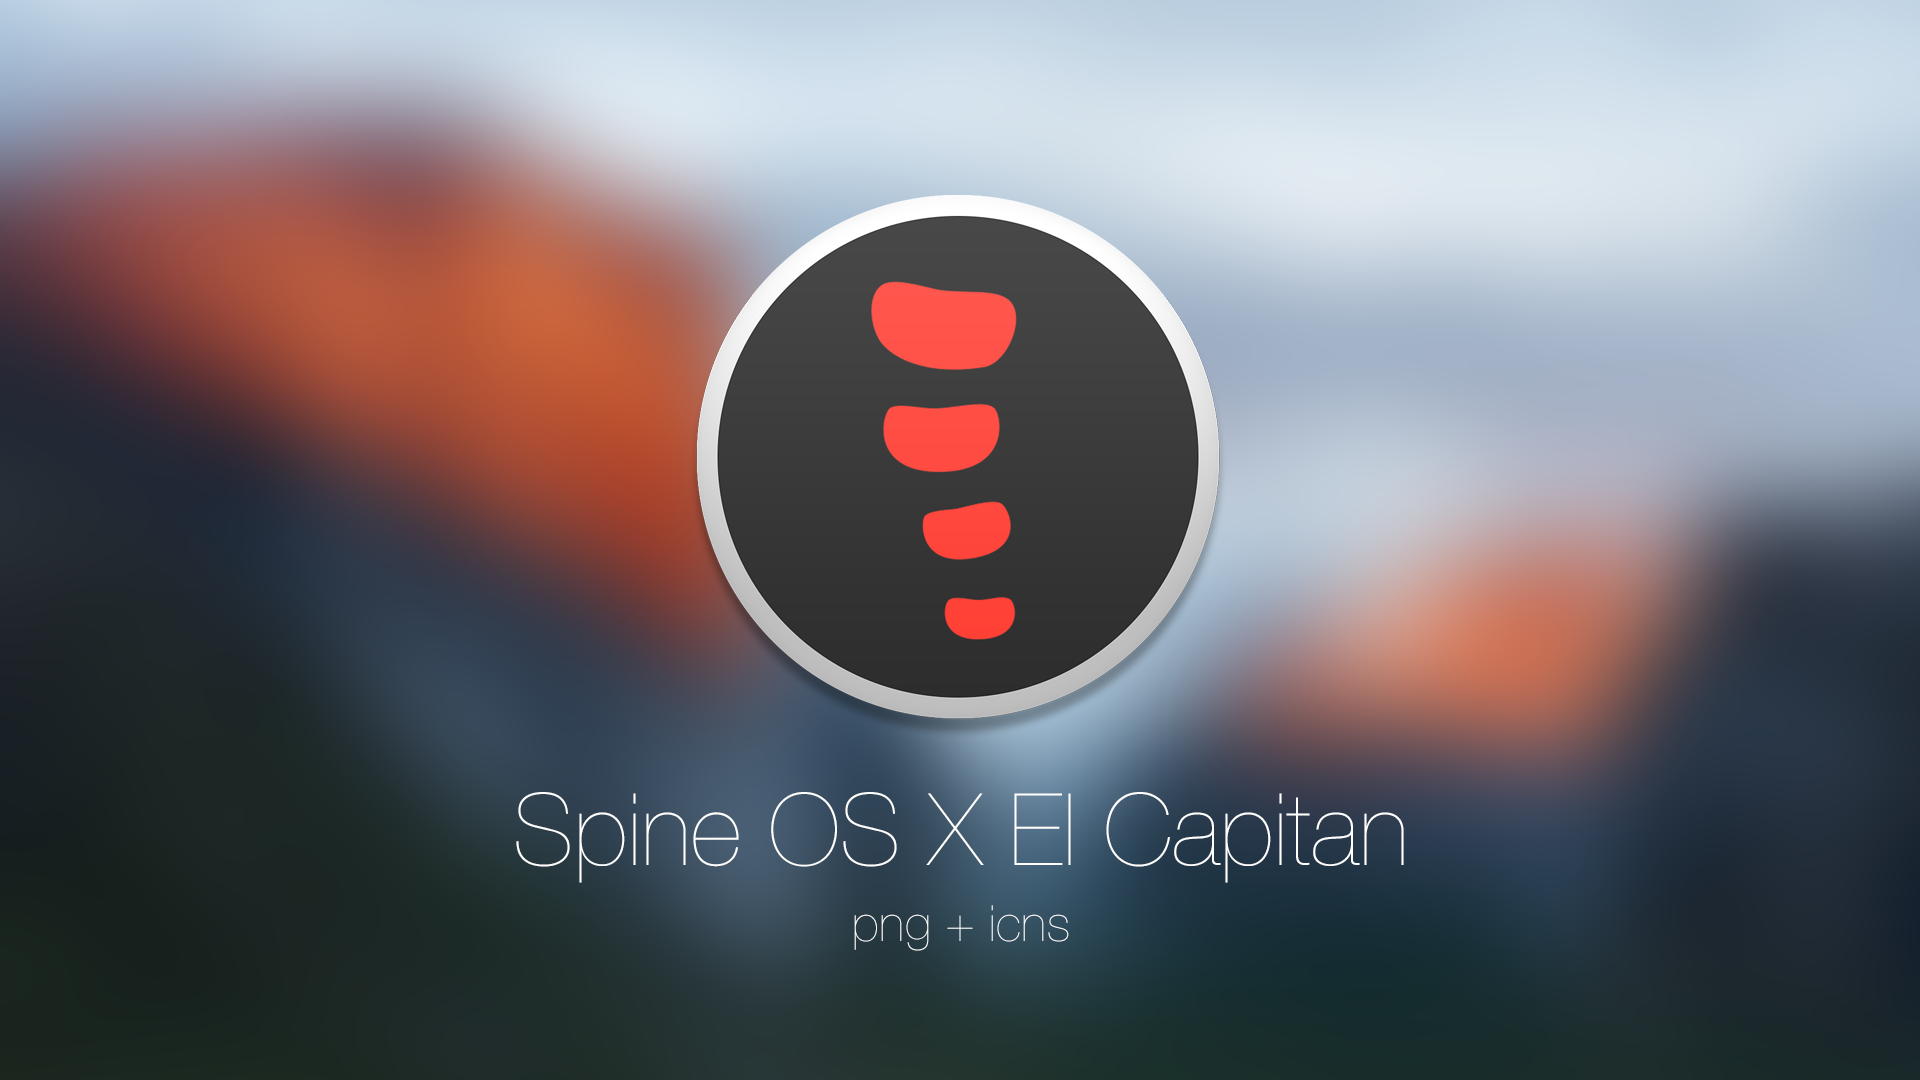 Spine OS X El Capitan by abrahamrojo on DeviantArt